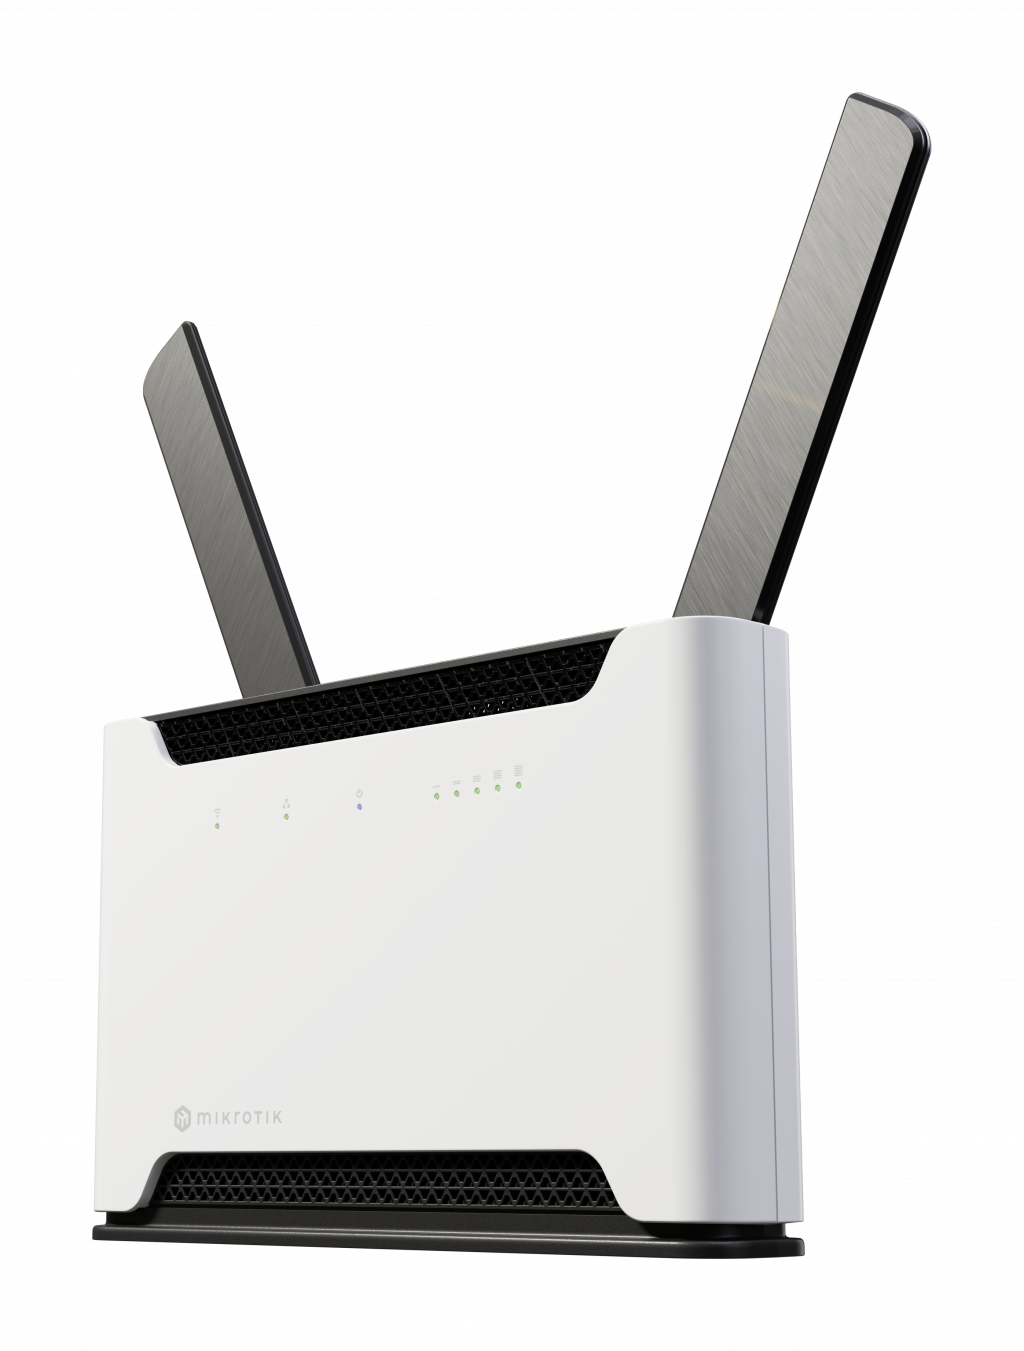 MikroTik Chateau LTE18 ax S53UG+5HaxD2HaxD-TC&EG18-EA 802.11ax, 574 Mbit/s (2.4 GHz) / 1200 Mbit/s (5 GHz) Mbit/s, Ethernet LAN (RJ-45) ports 4, 4G, 1 | Chateau LTE18 ax | S53UG+5HaxD2HaxD-TC&EG18-EA | 802.11ax | 574 Mbit/s (2.4 GHz) / 1200 Mbit/s (5 GHz) Mbit/s | Ethernet LAN (RJ-45) ports 4 | 4G | 1